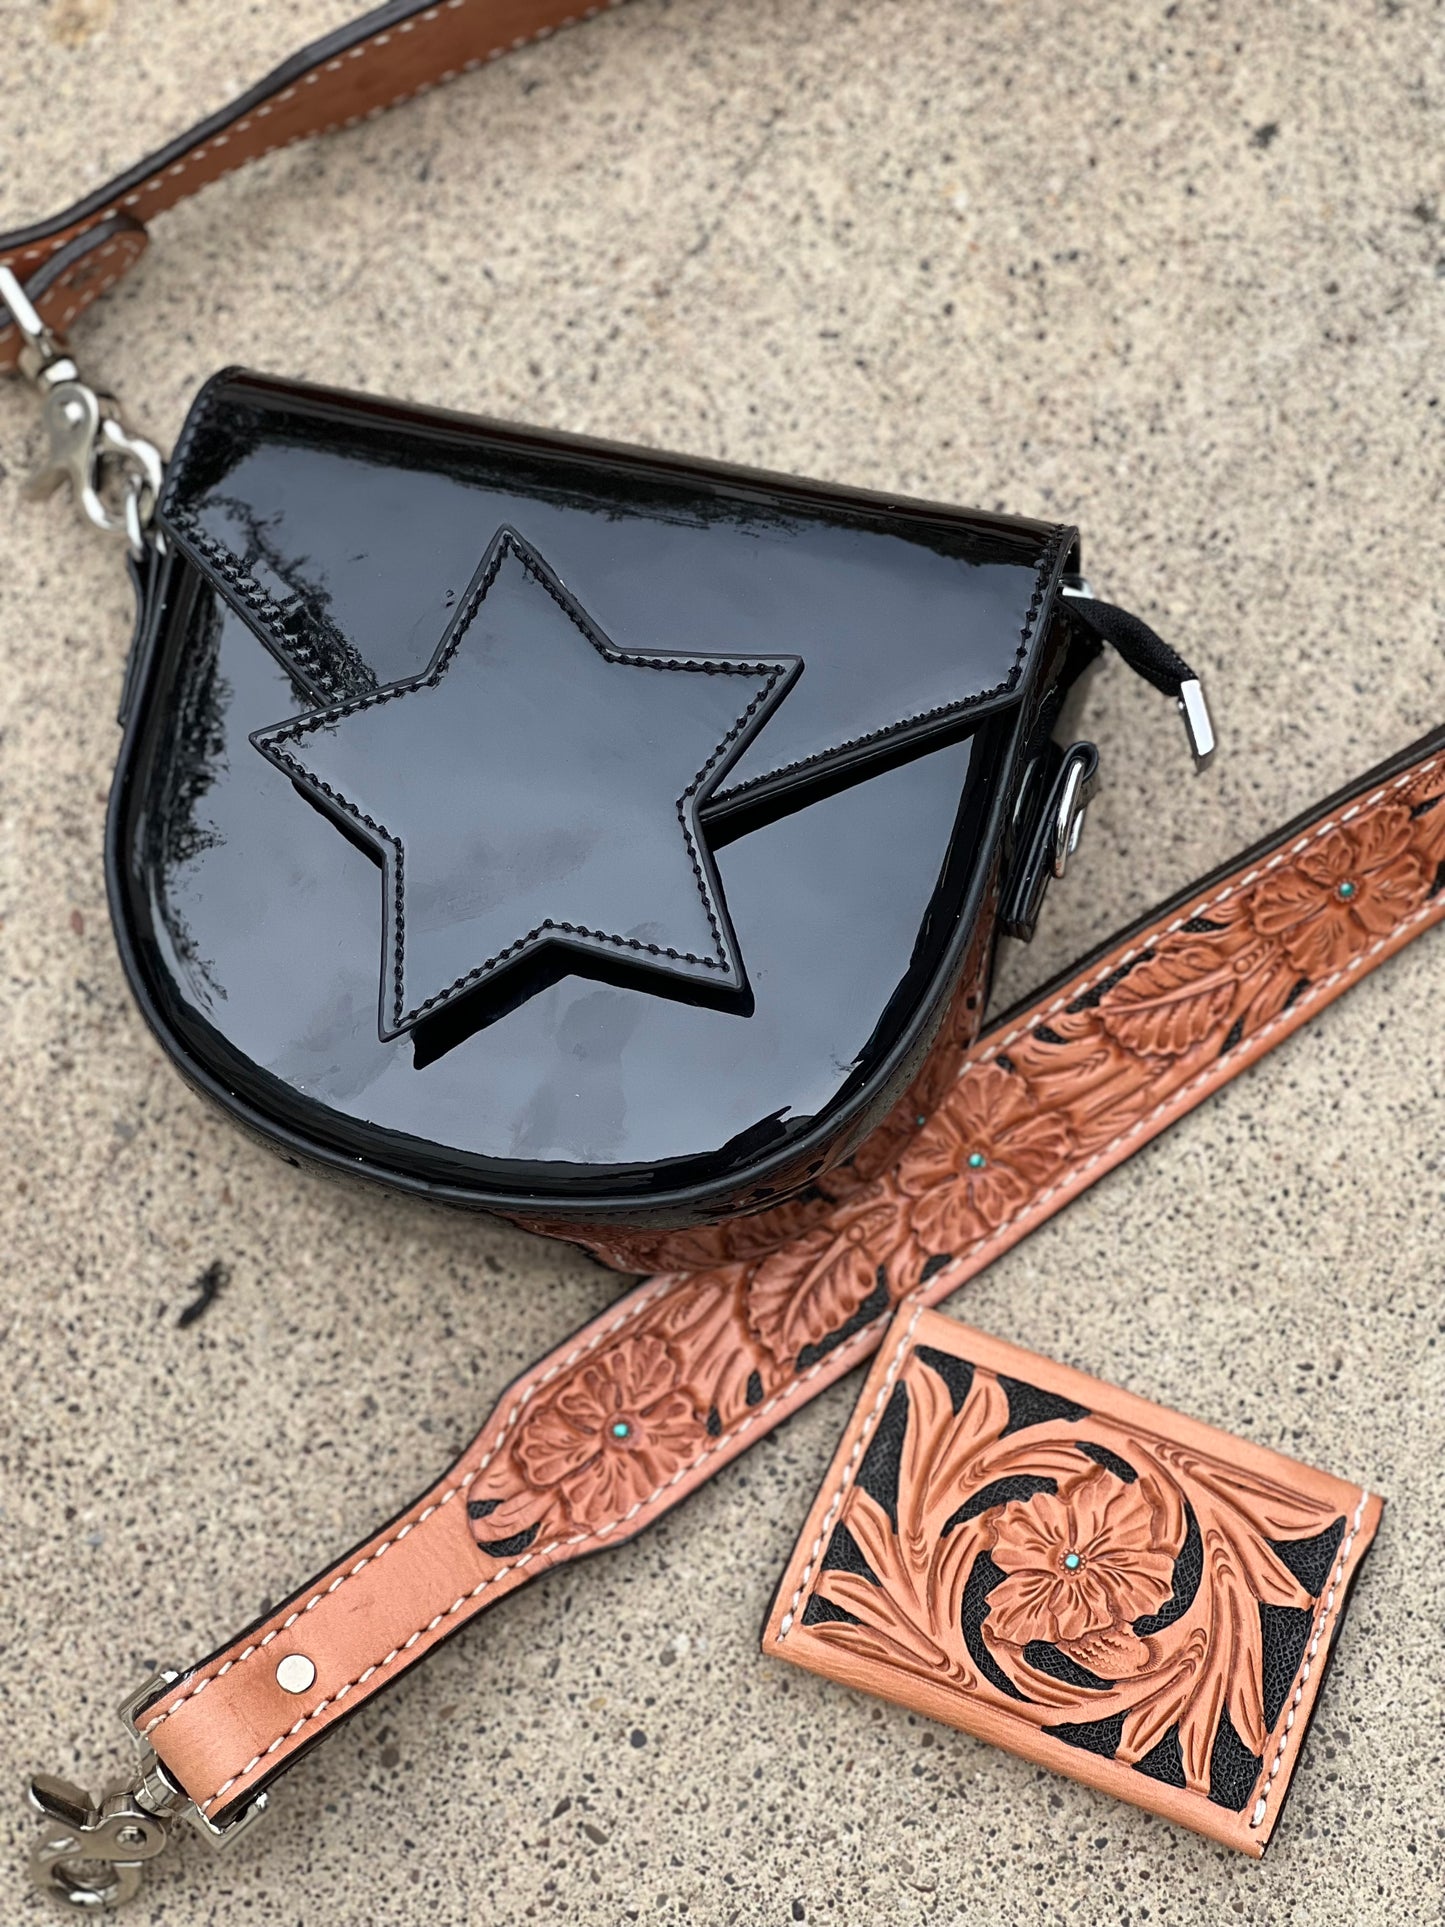 Metallic mini Star Saddle bag w/ FREE STADIUM BAG!